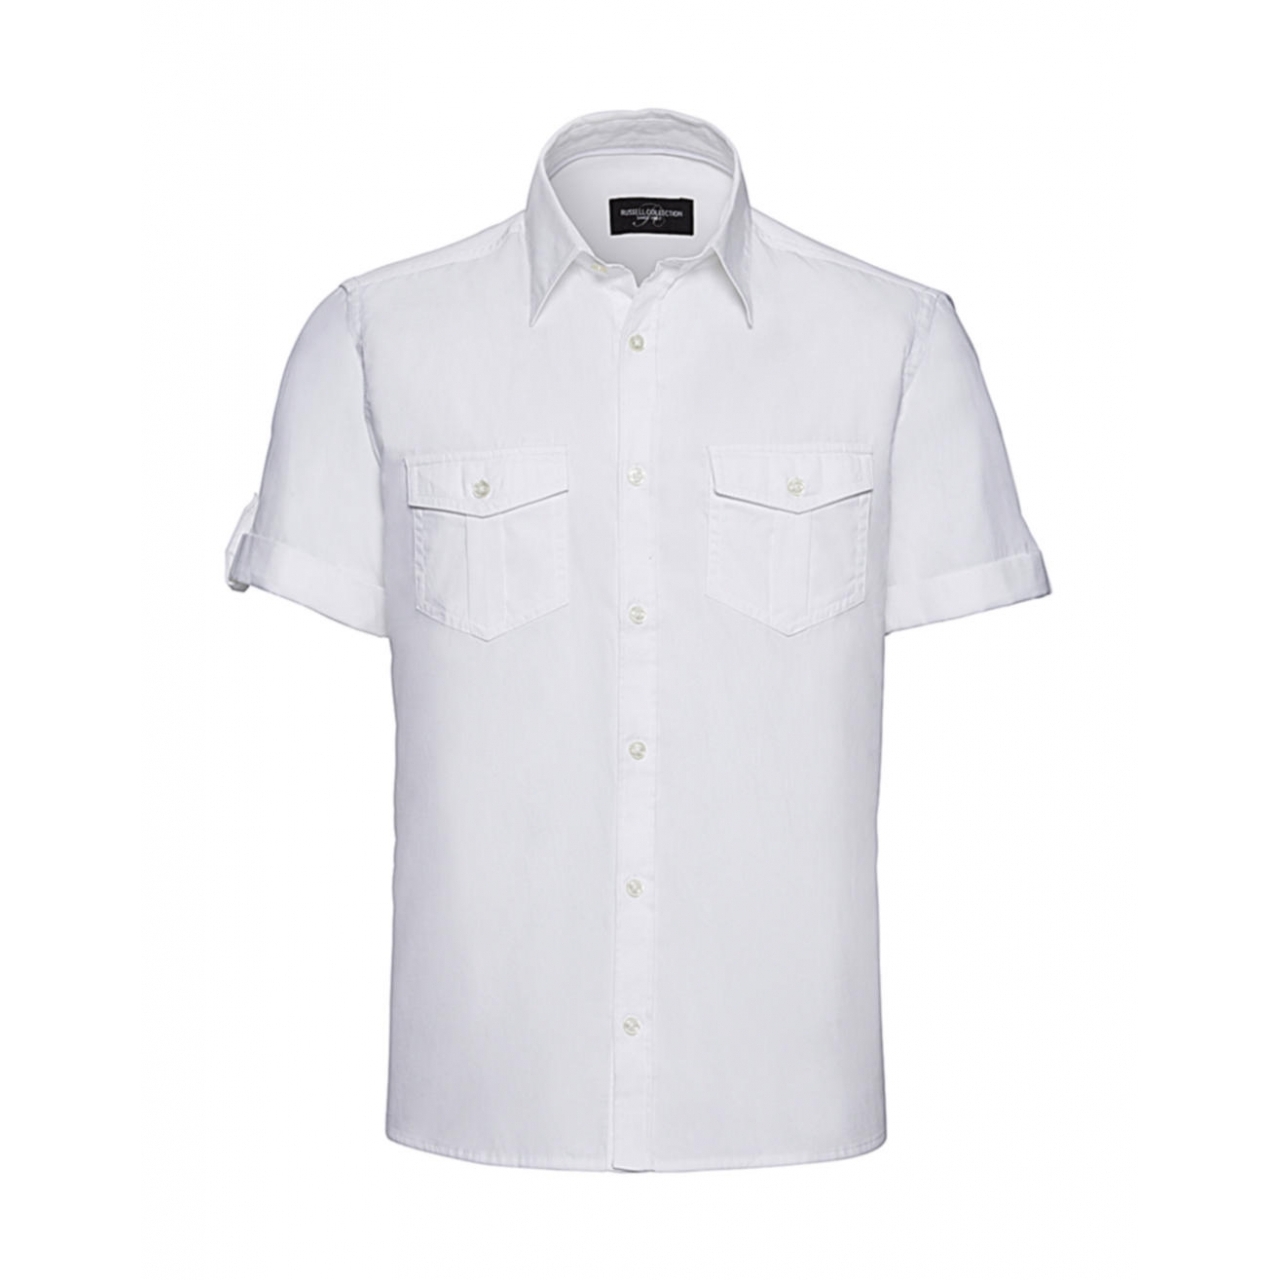 Košile pánská krátký rukáv Rusell Roll Sleeve - bílá, S